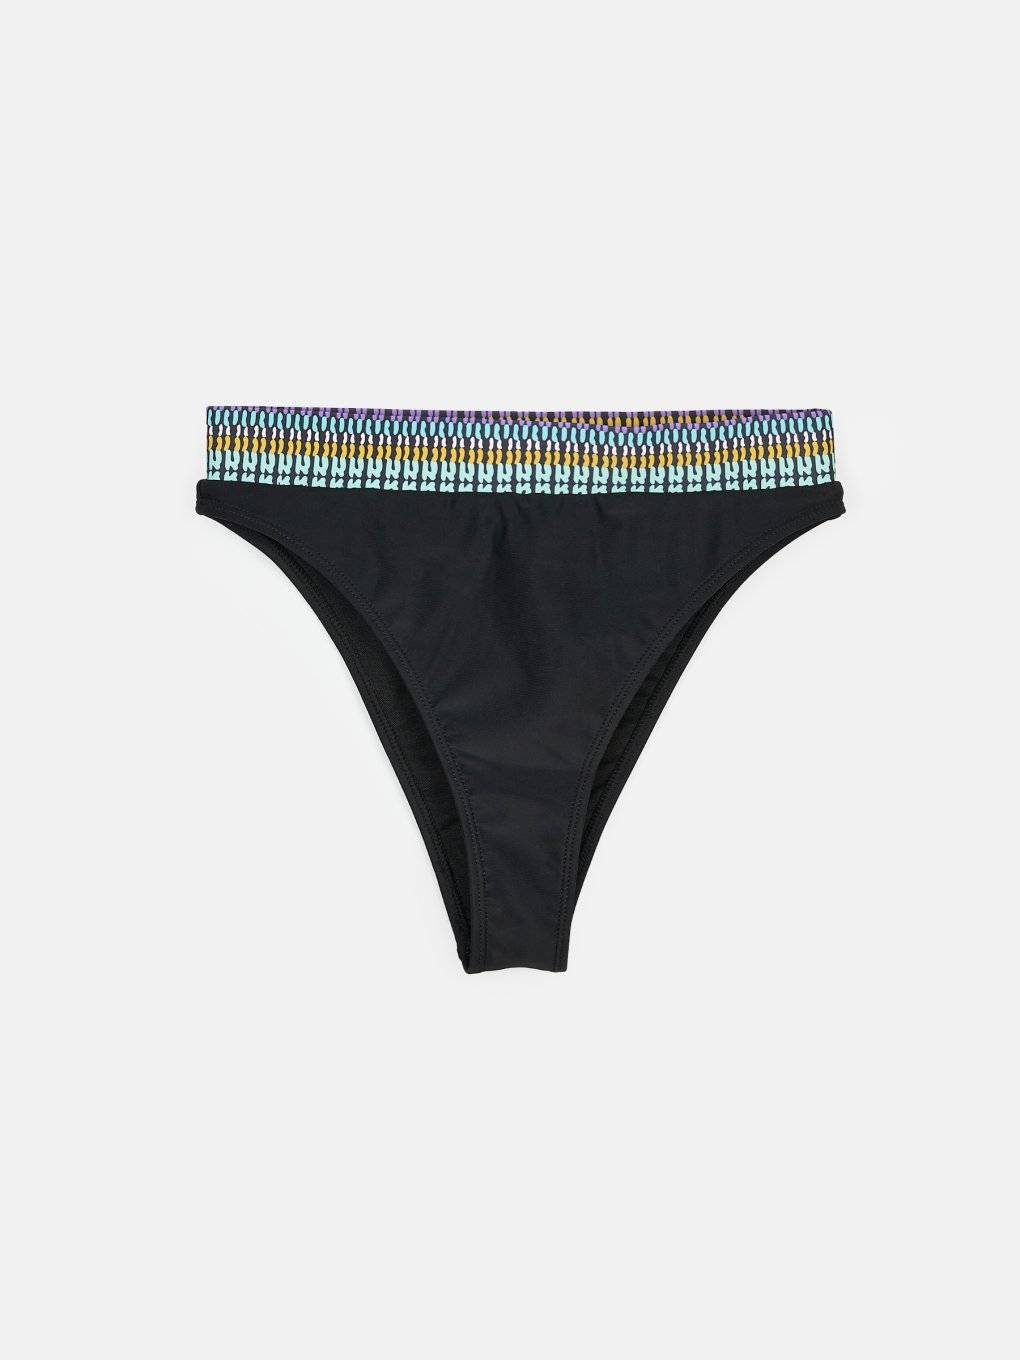 Bikini bottom with decorative waistband